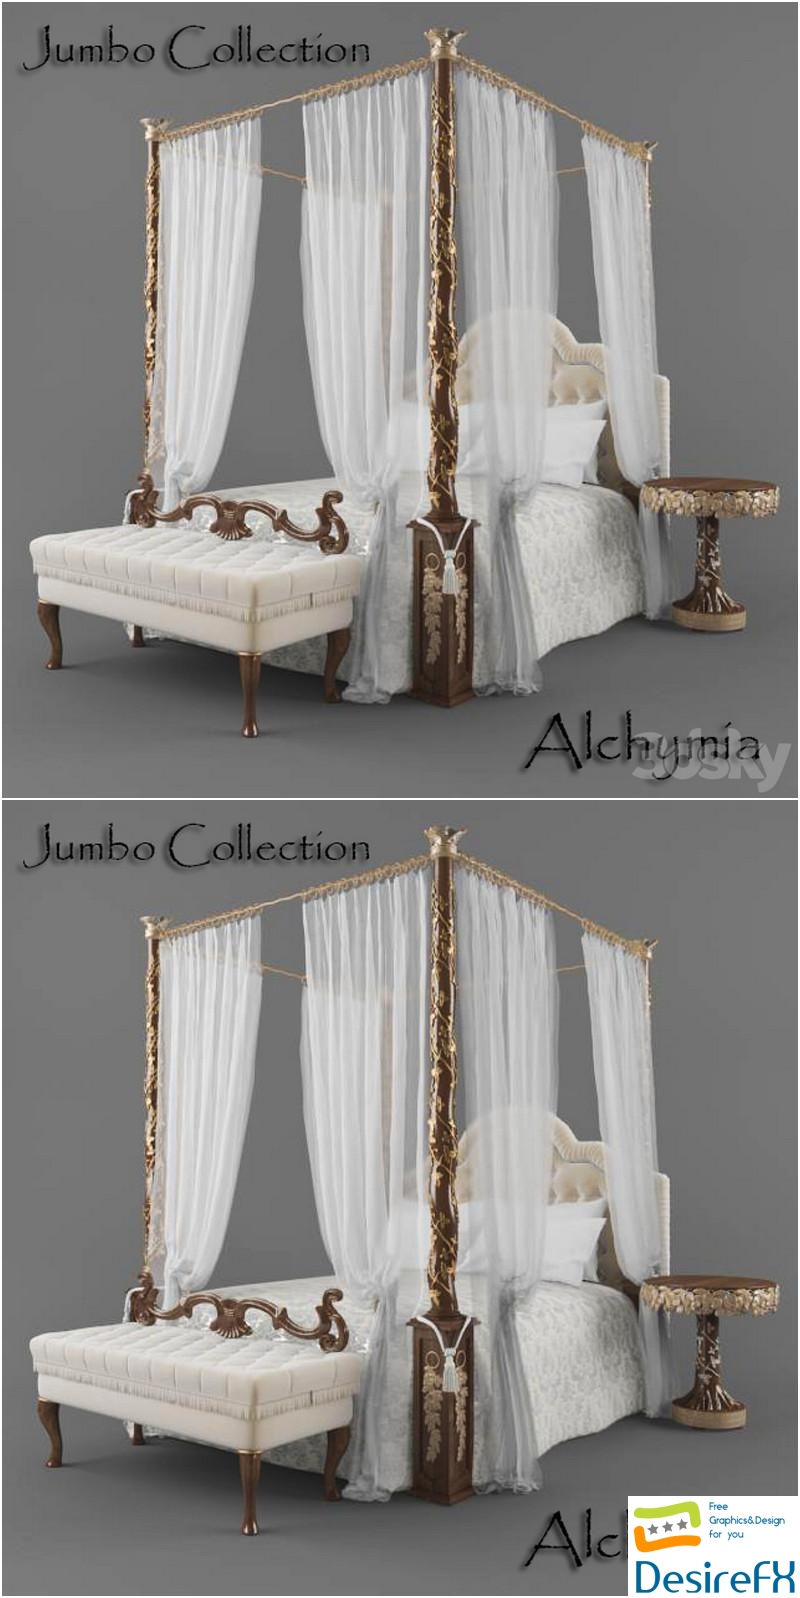 Jumbo Collection Alchymia 3D Model